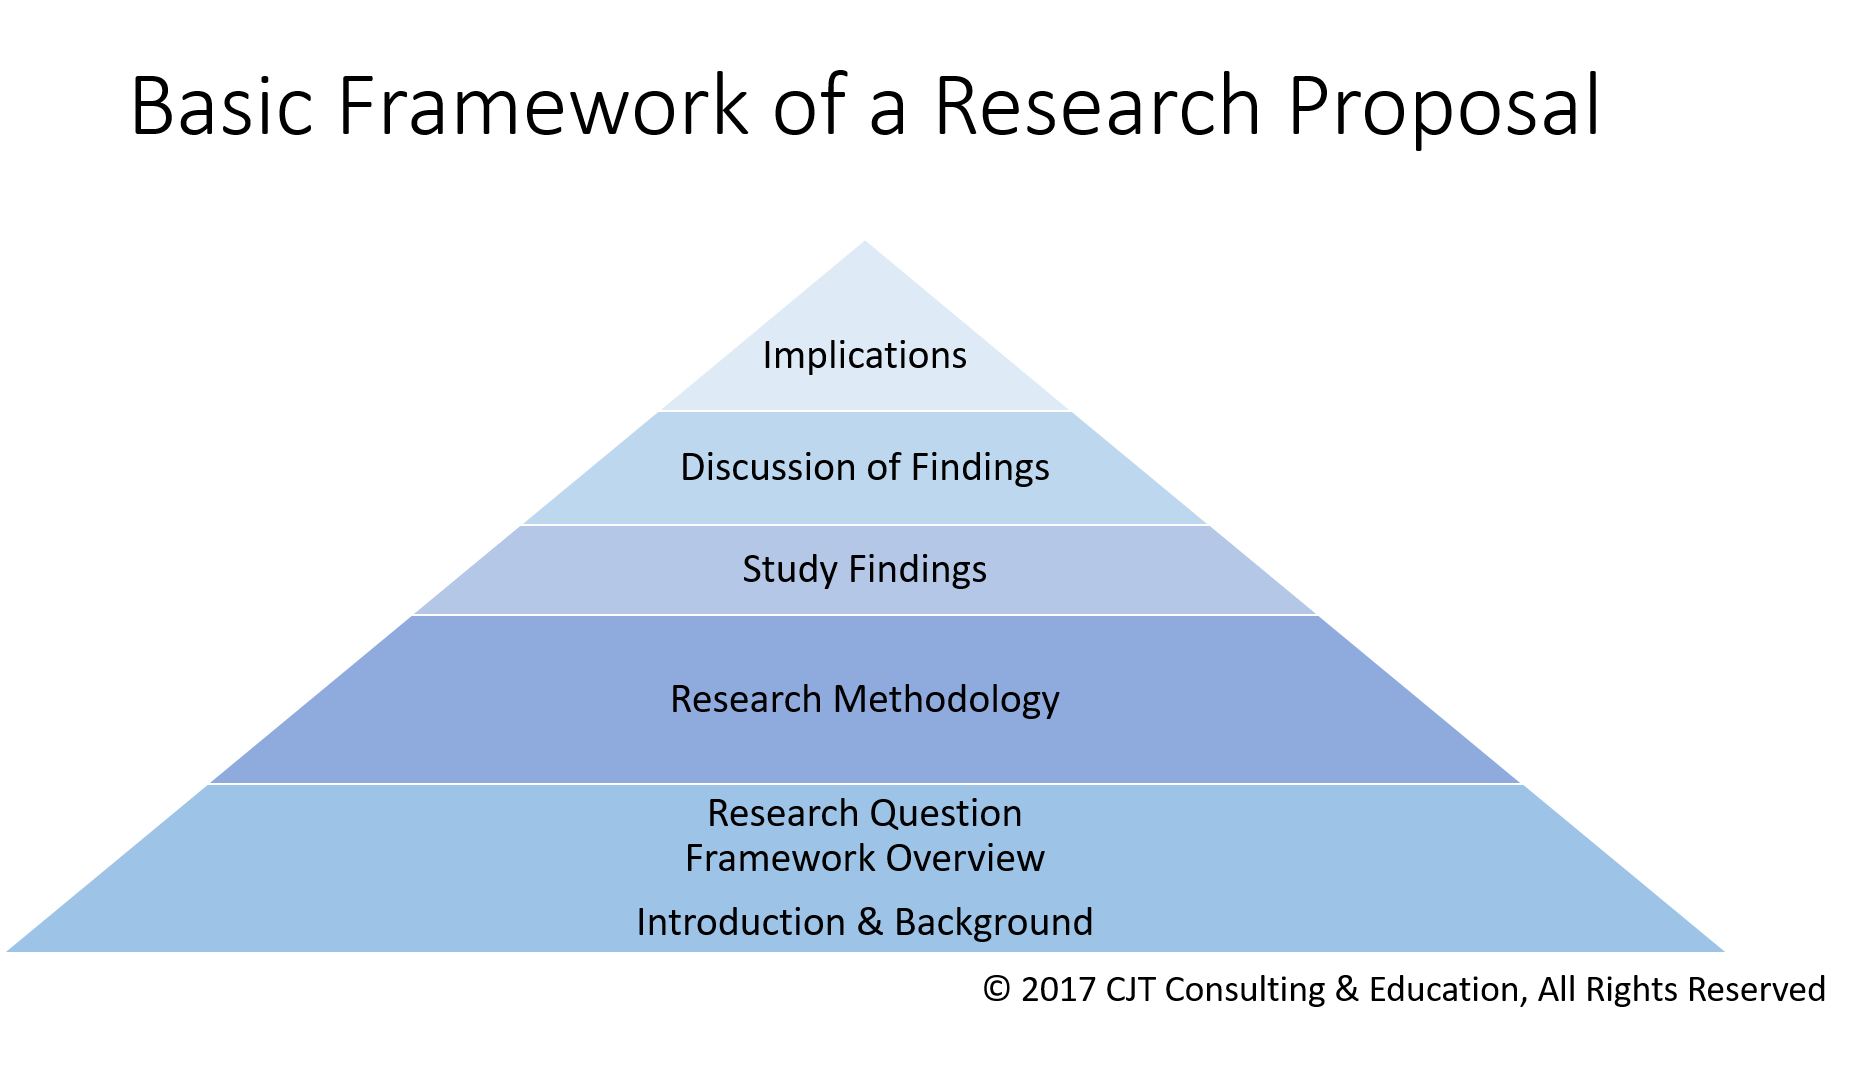 research framework definition